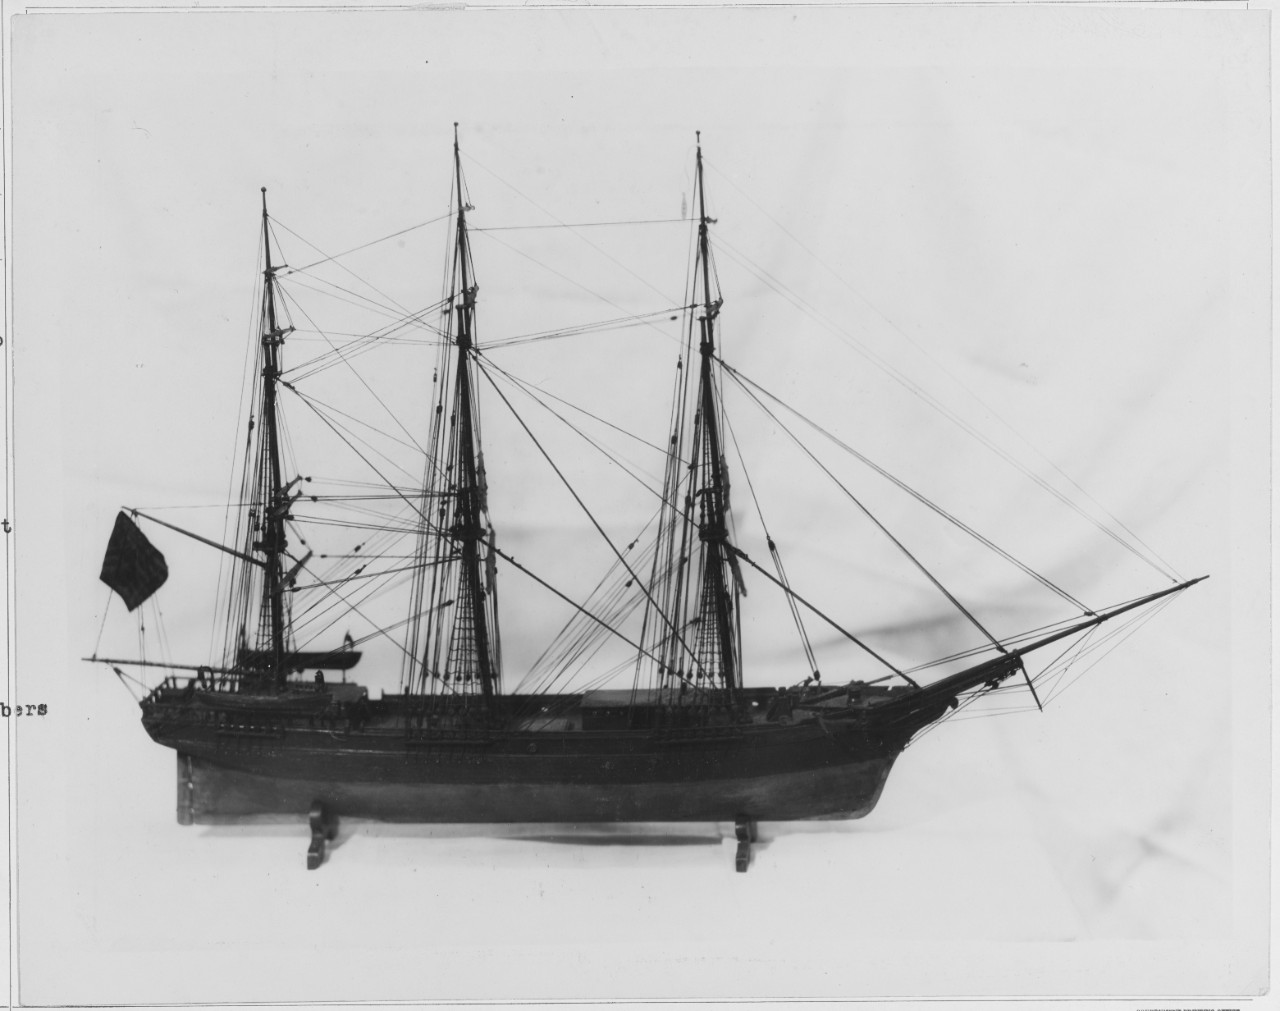 Model of the American Ship RAINBOW, circa 1854